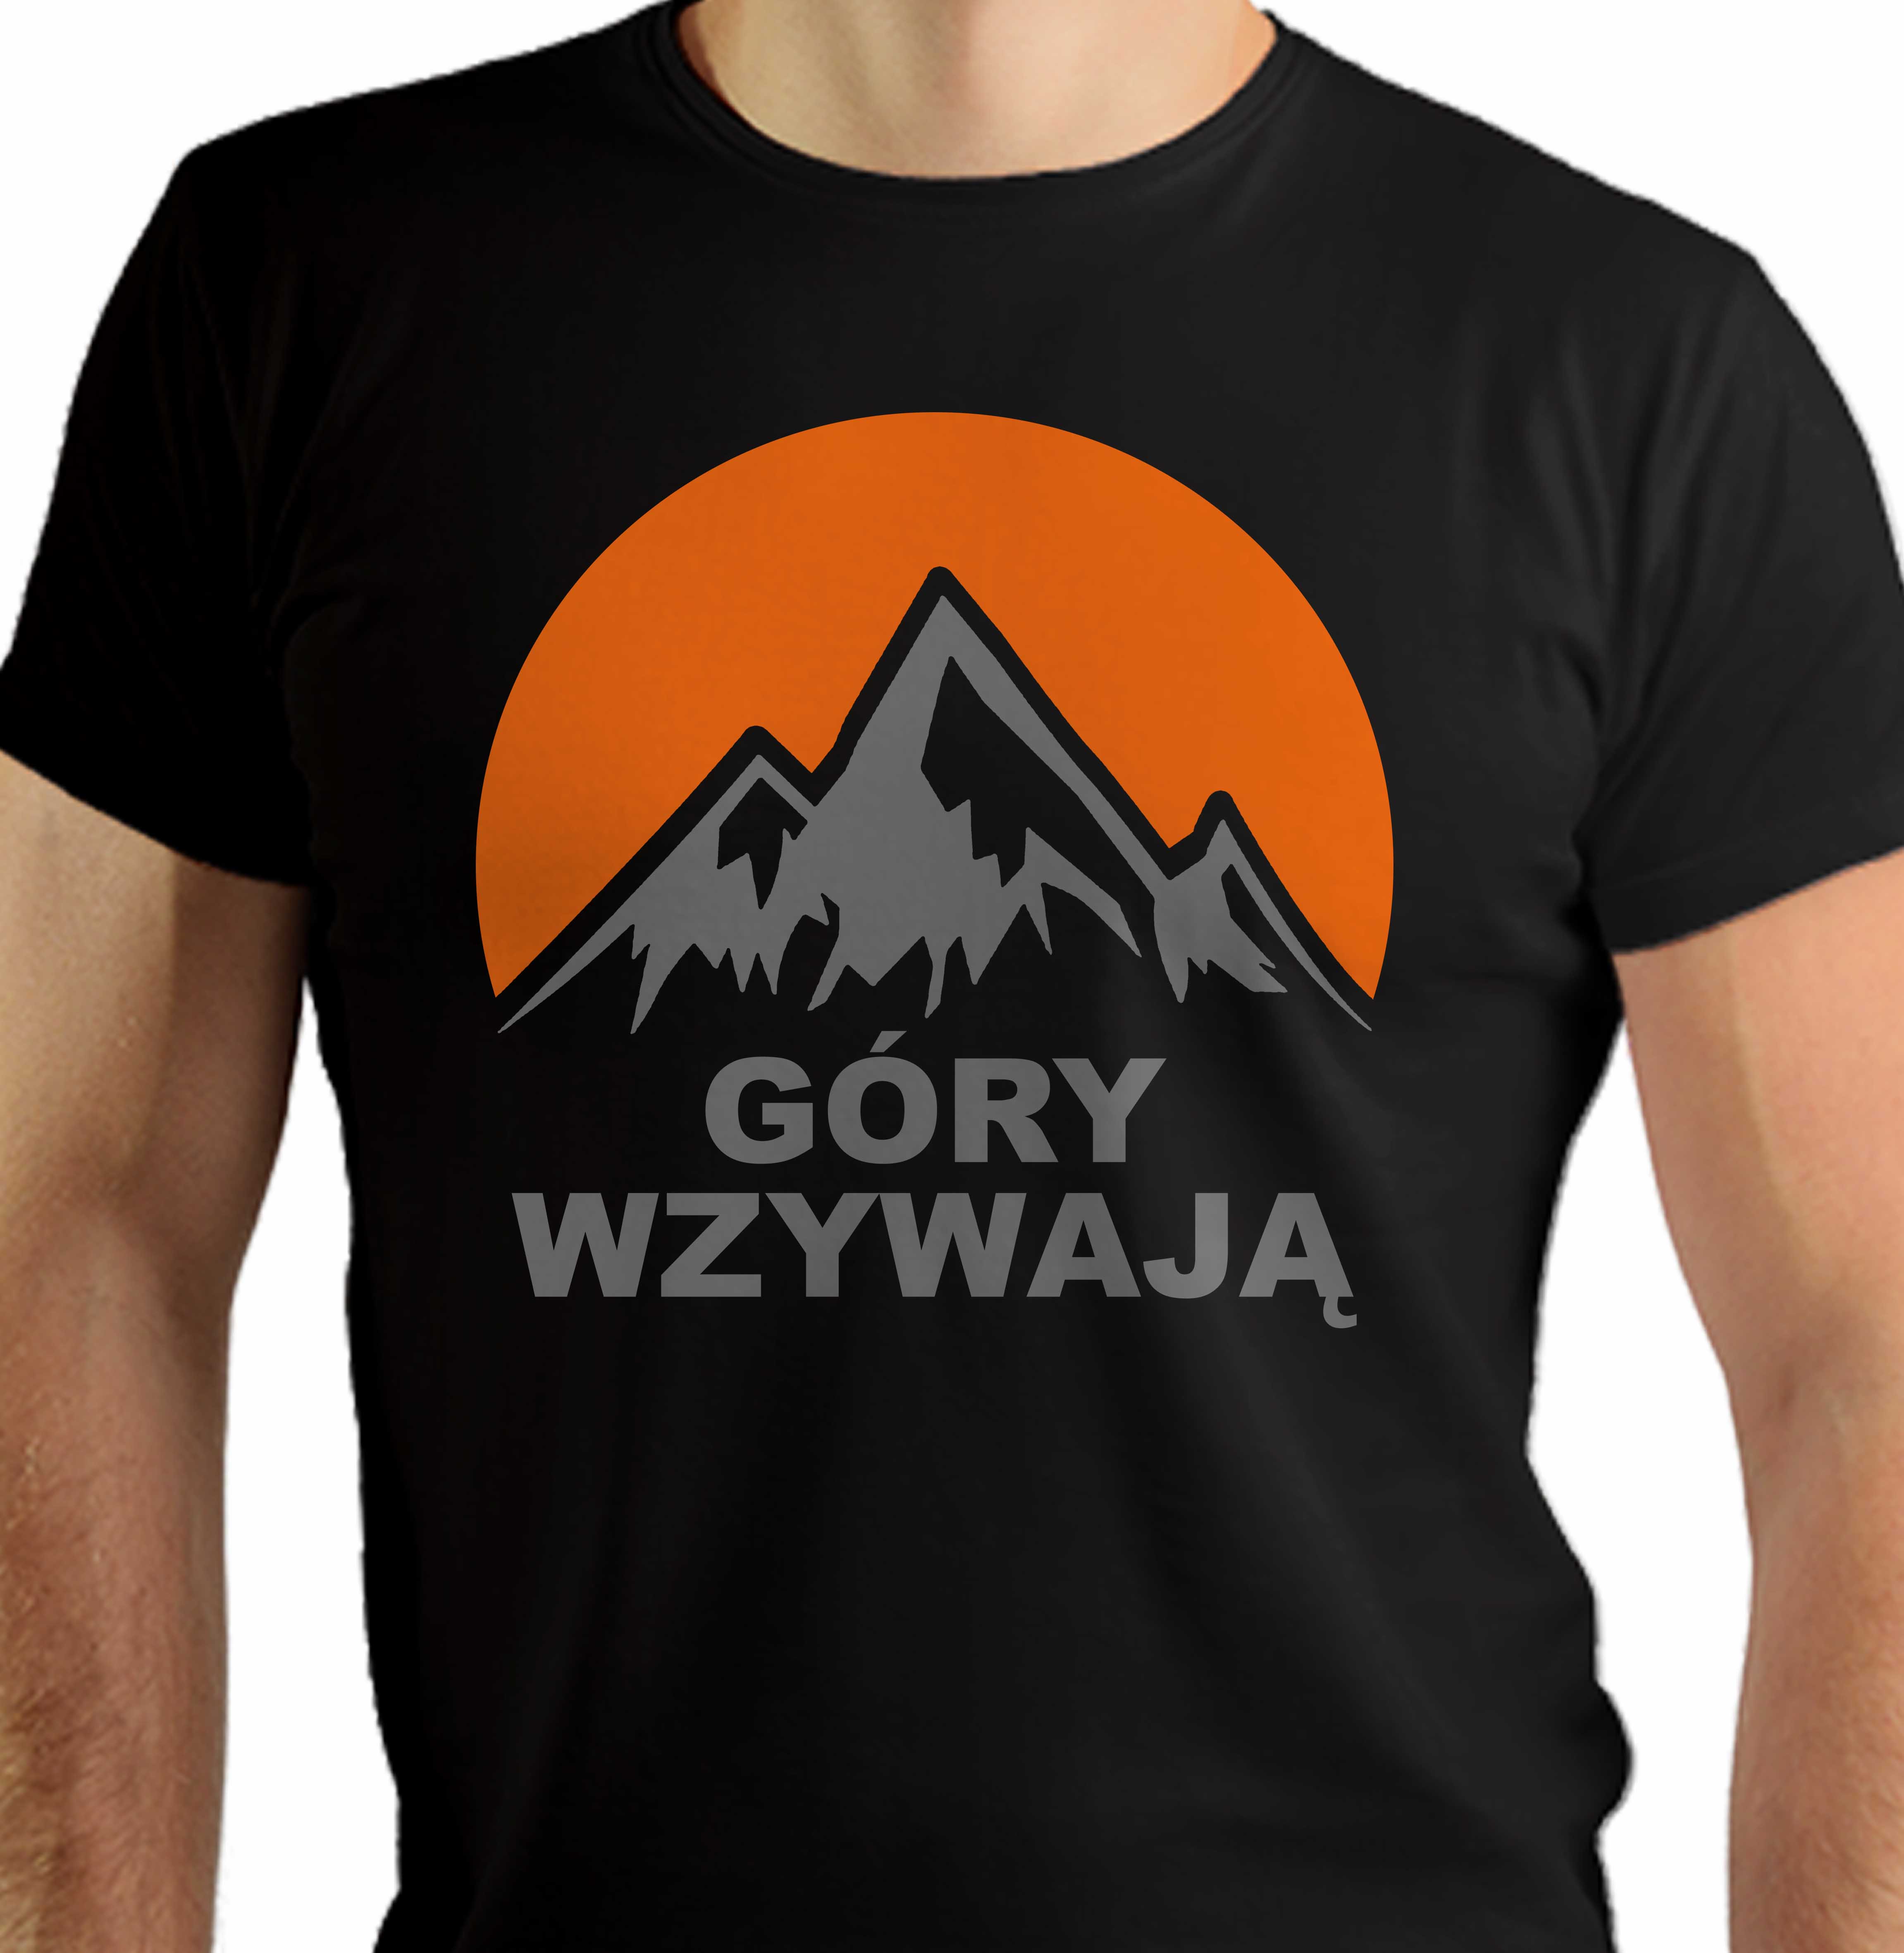 Góry wzywają - góry - męska koszulka dla miłośników gór